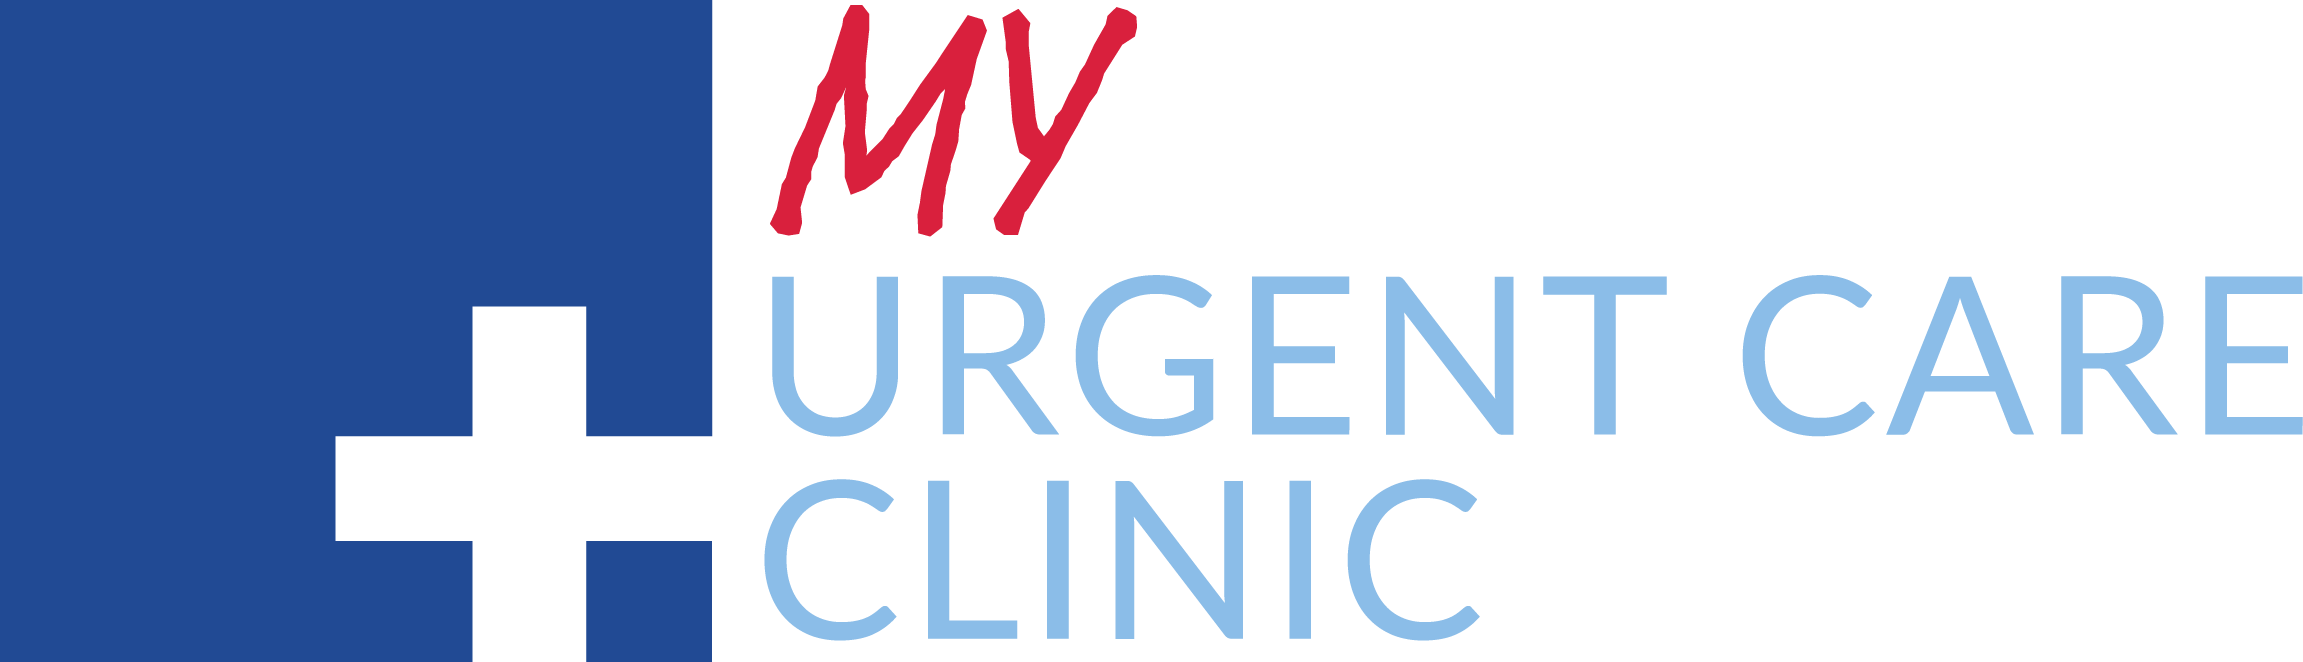 My Urgent Care Clinic logo